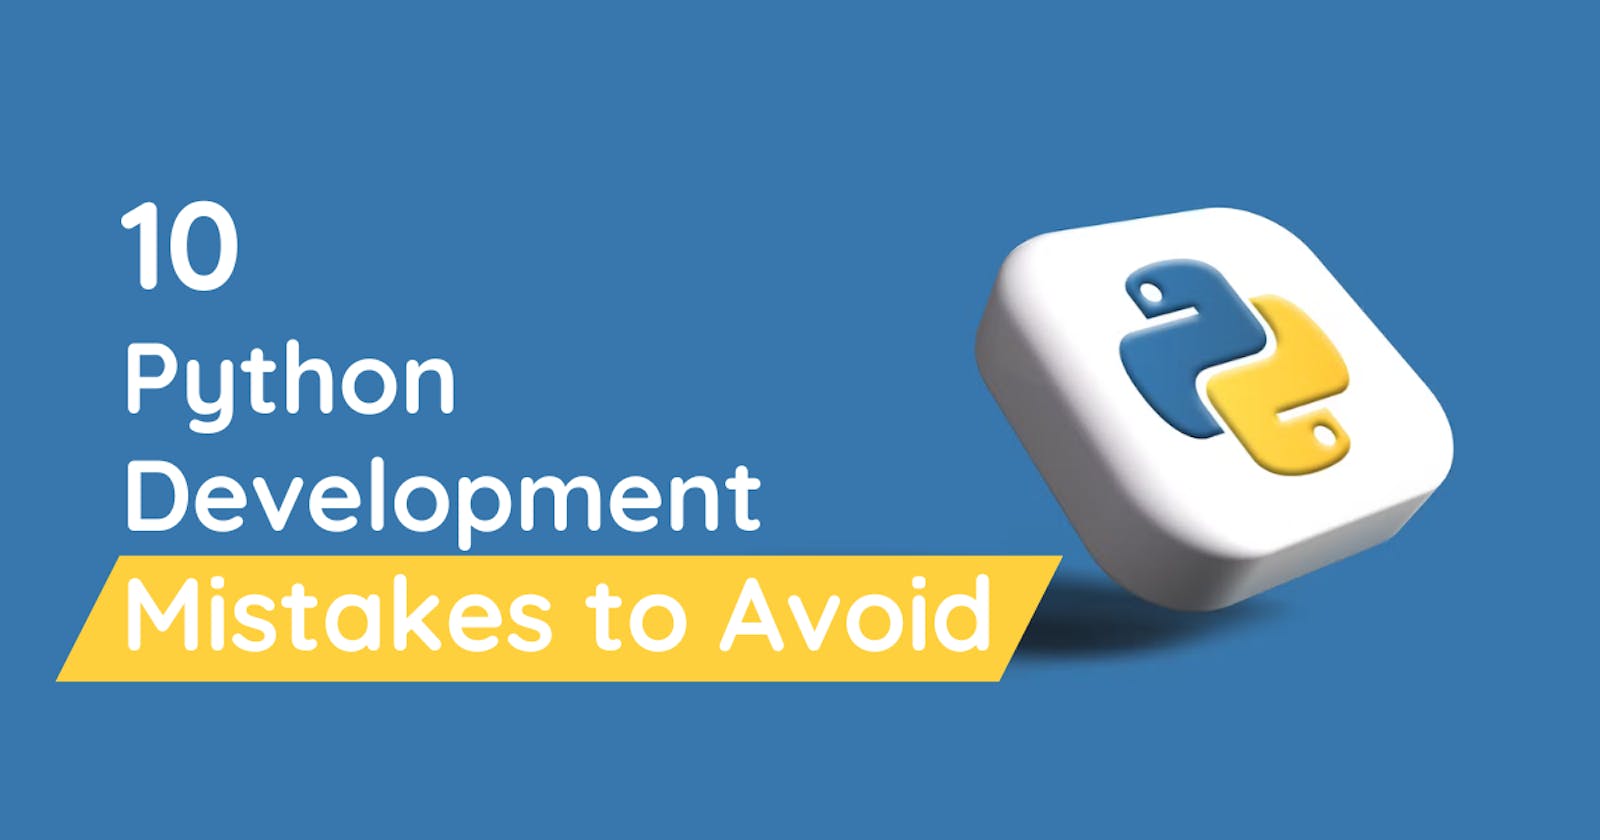 Avoiding Common Mistakes in Python Programming